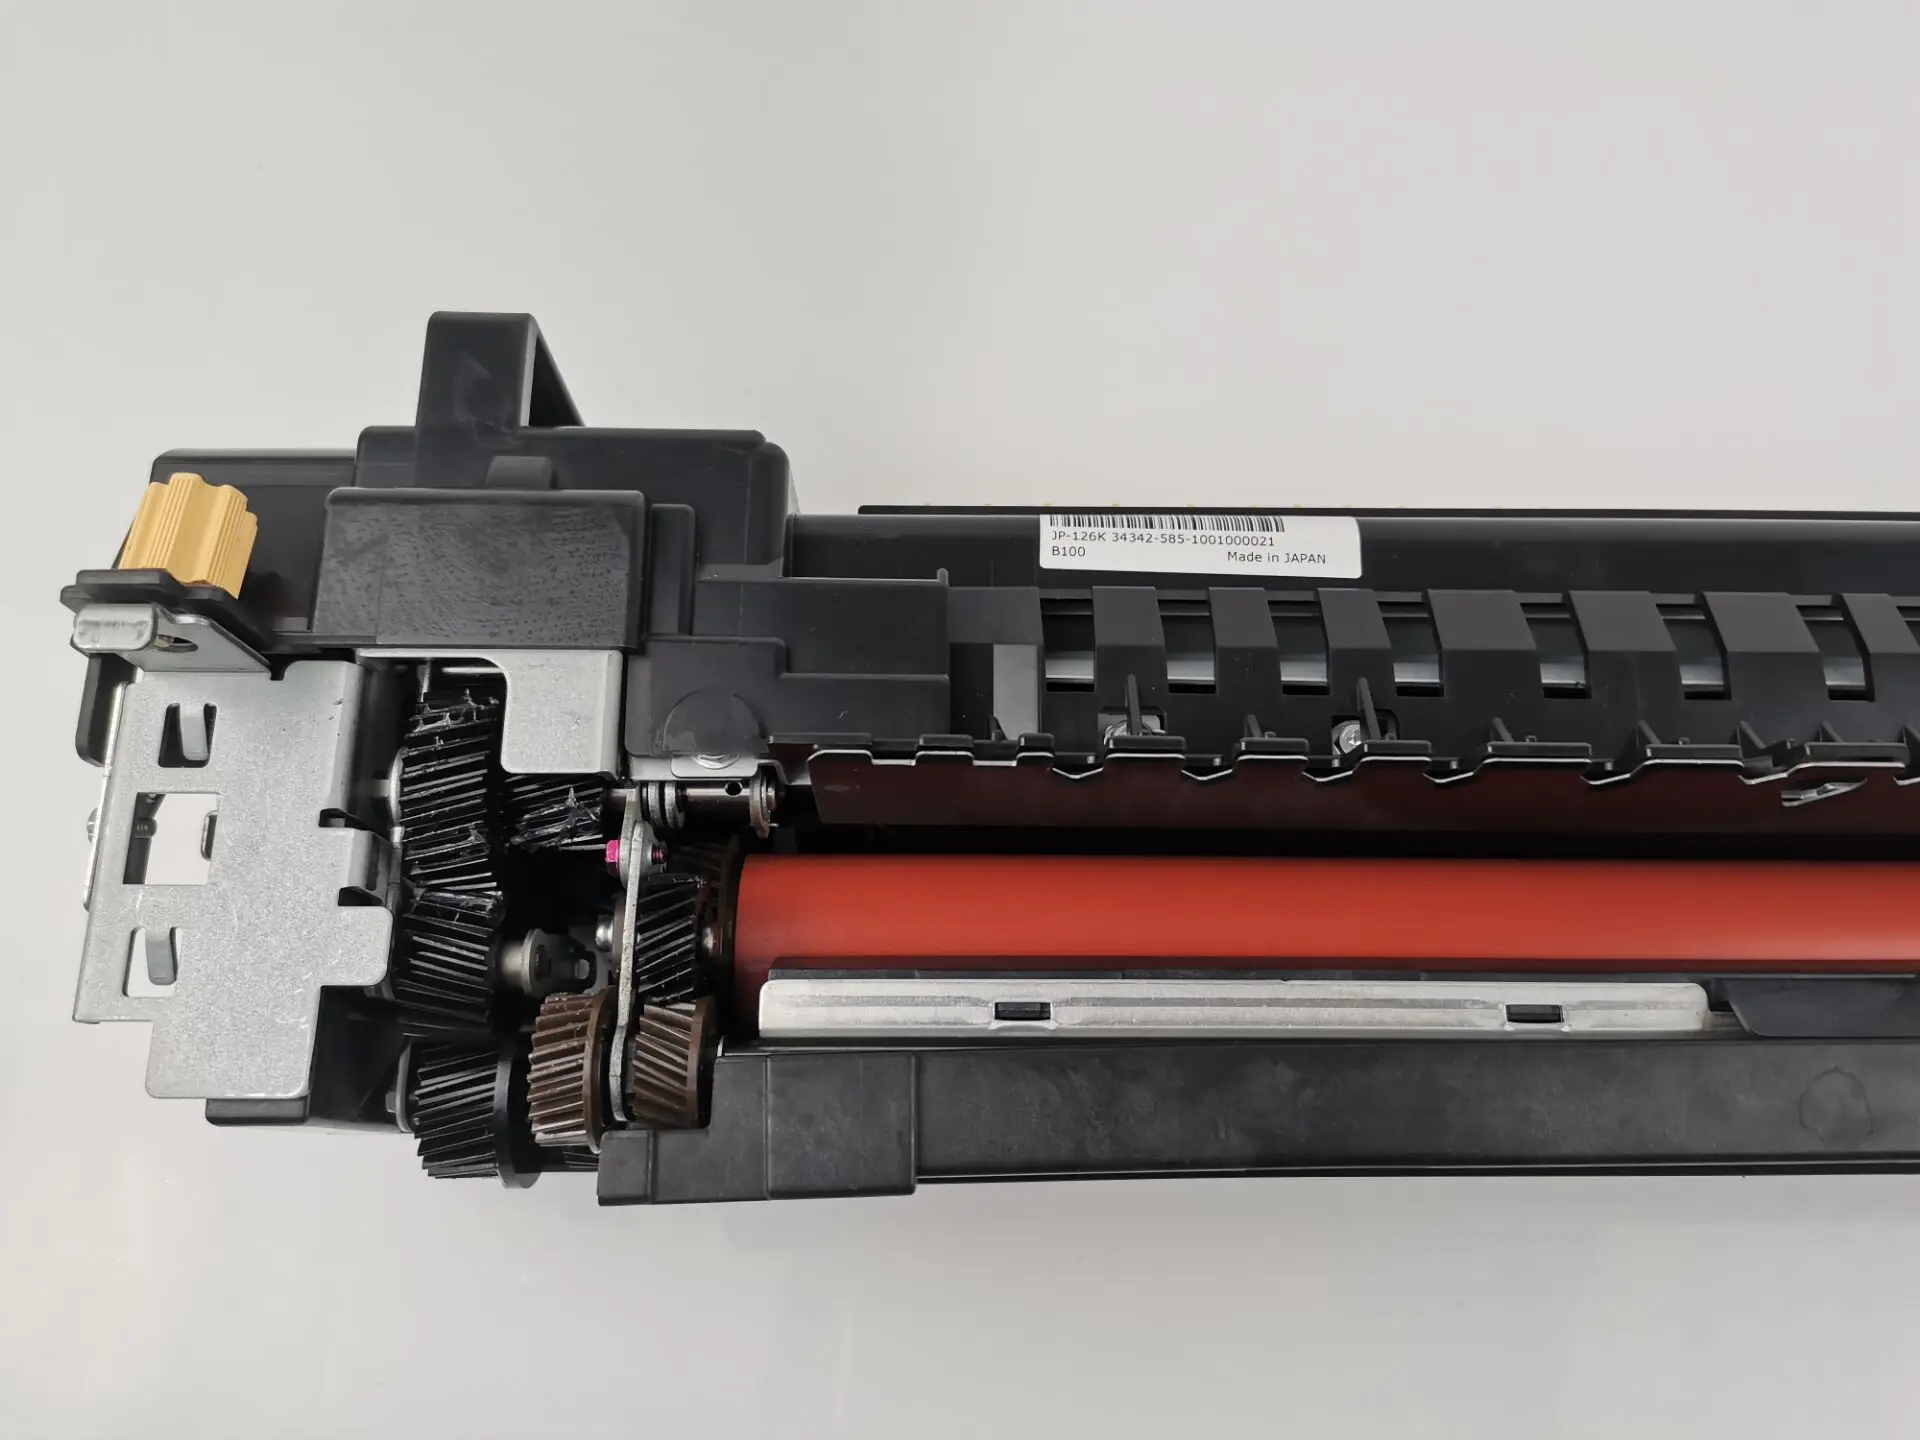 Big Sale Original Refurbished for XEROX Phaser 7800 Fuser Assembly 1110/220V Printer Spare Parts Printer